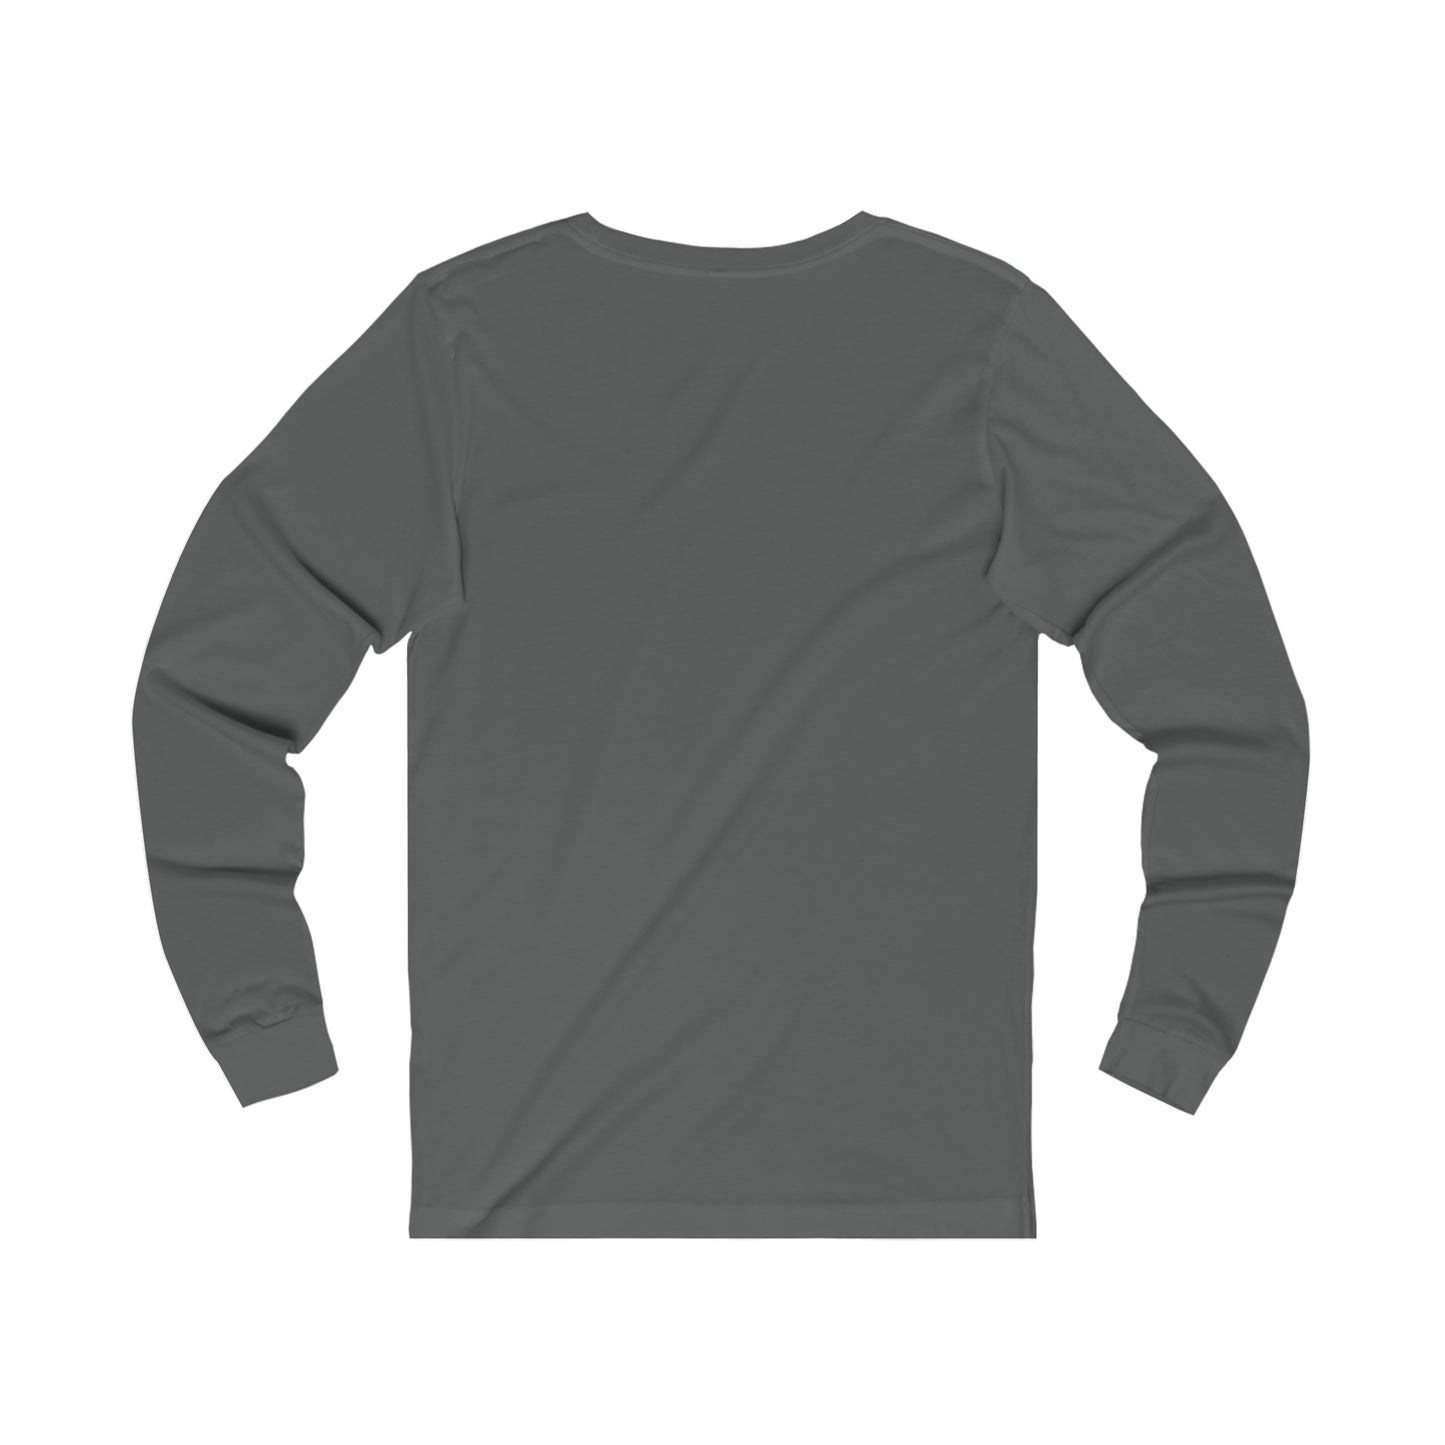 Colourful 3D Cube - Unisex Long Sleeve T-Shirt